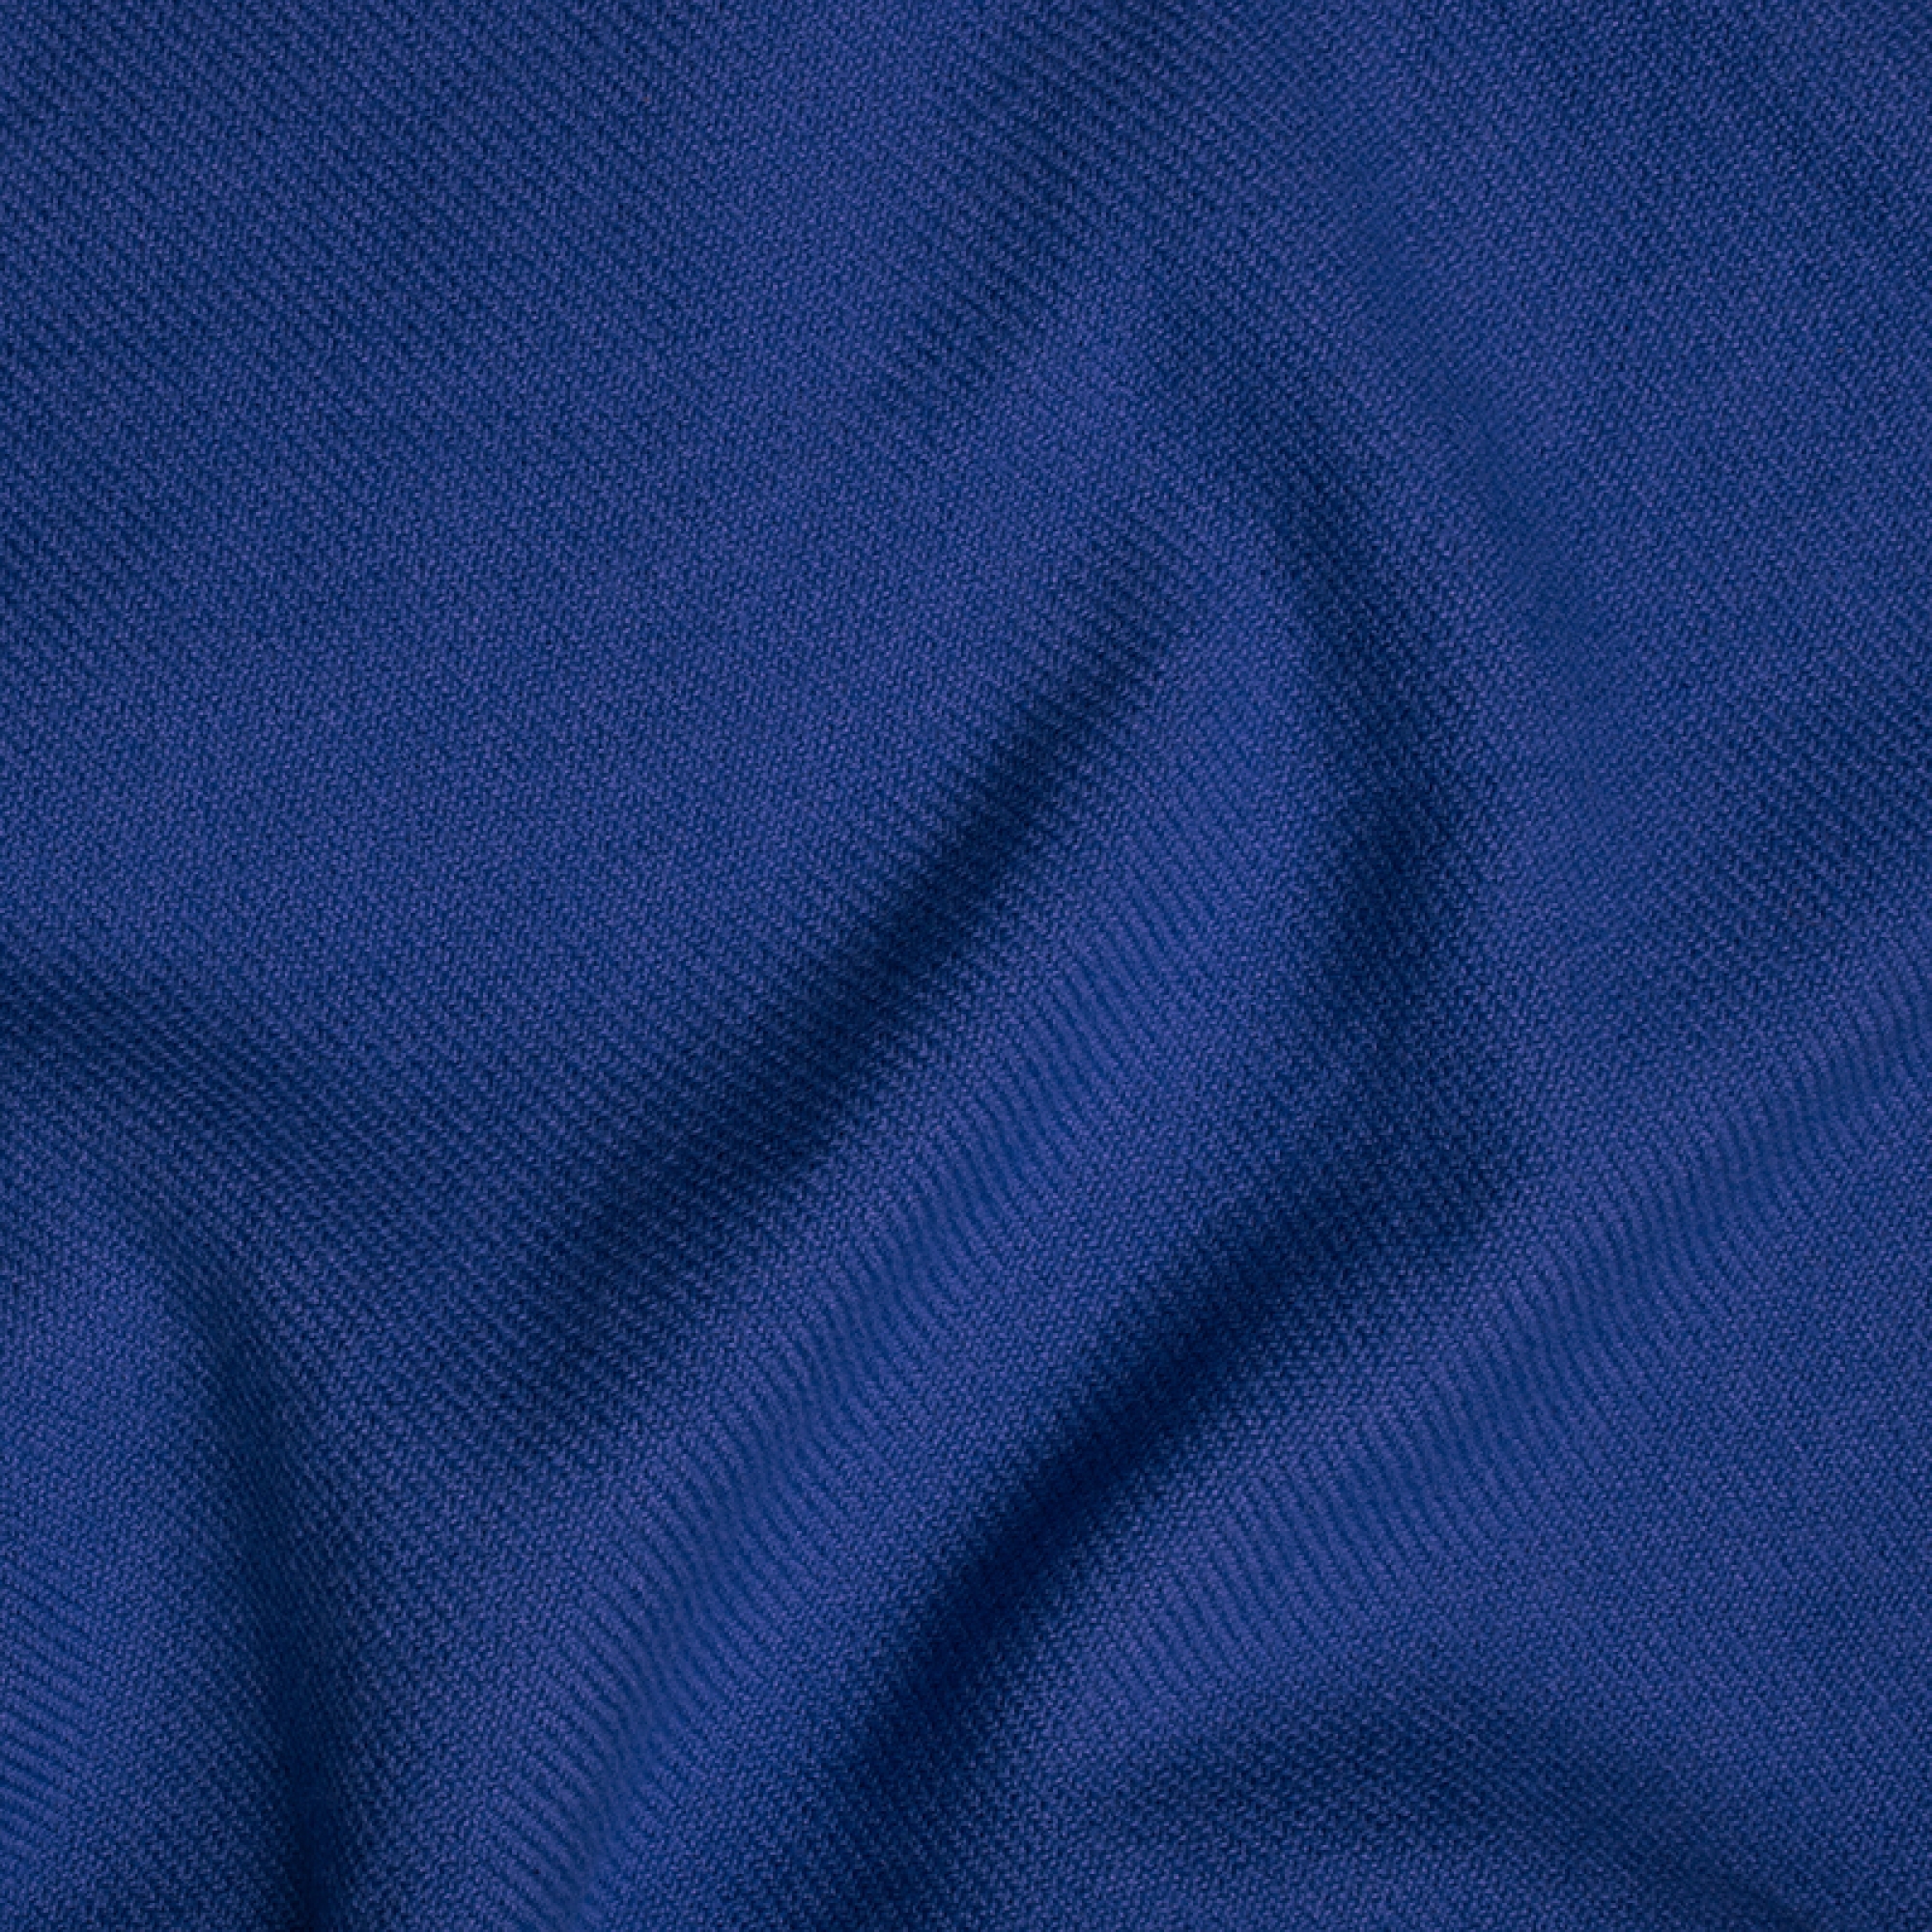 Cashmere accessories blanket frisbi 147 x 203 light cobalt blue 147 x 203 cm